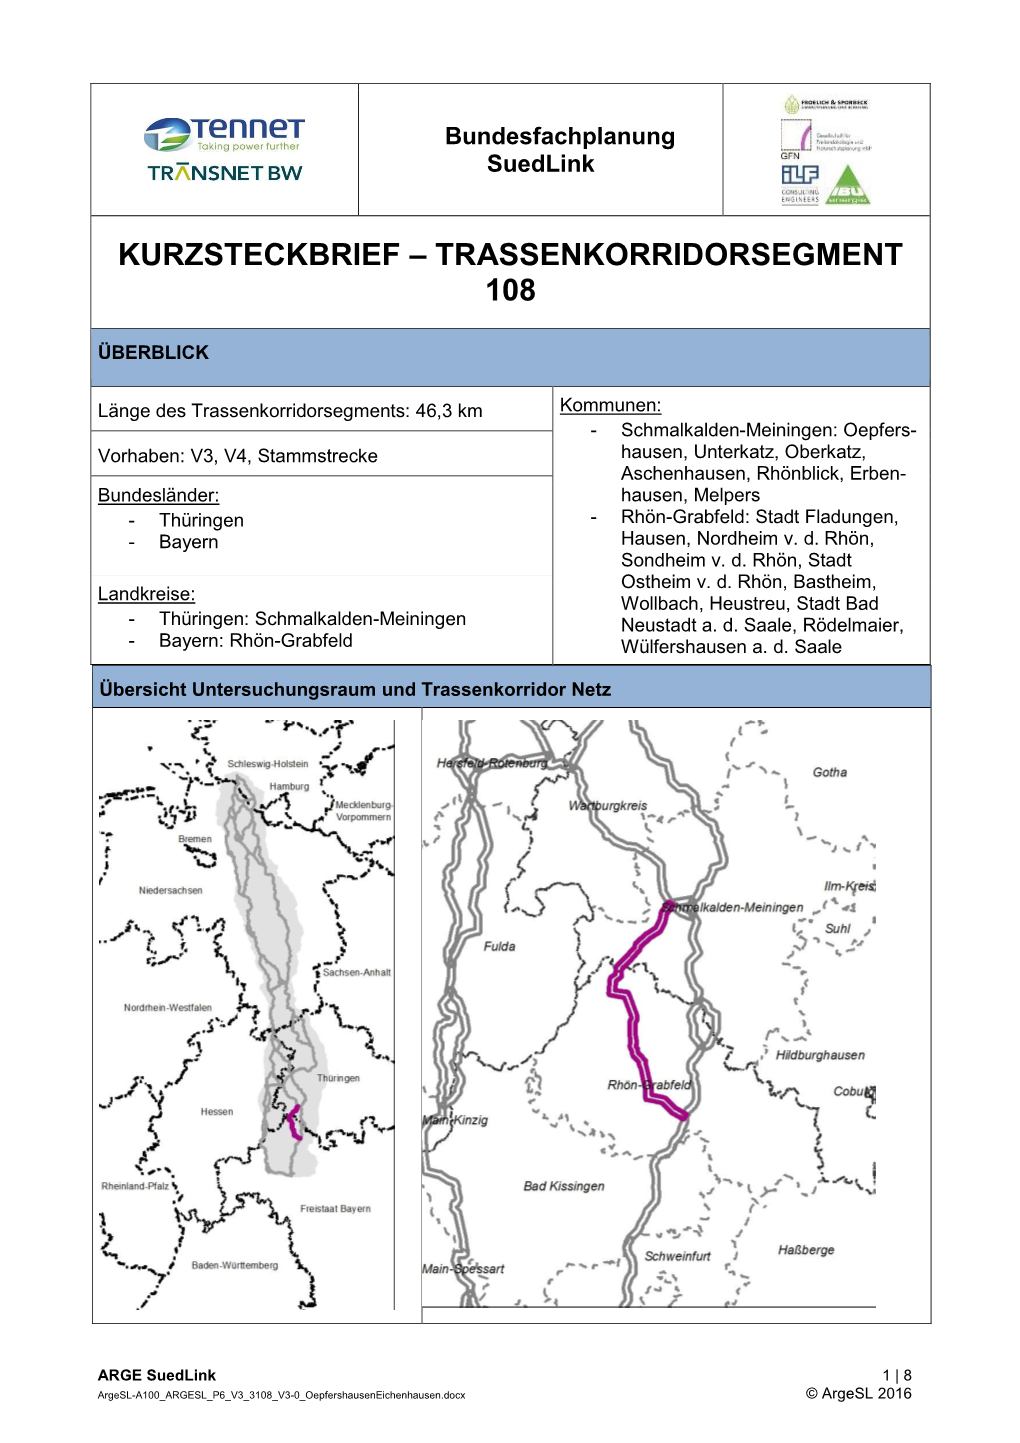 Kurzsteckbrief – Trassenkorridorsegment 108